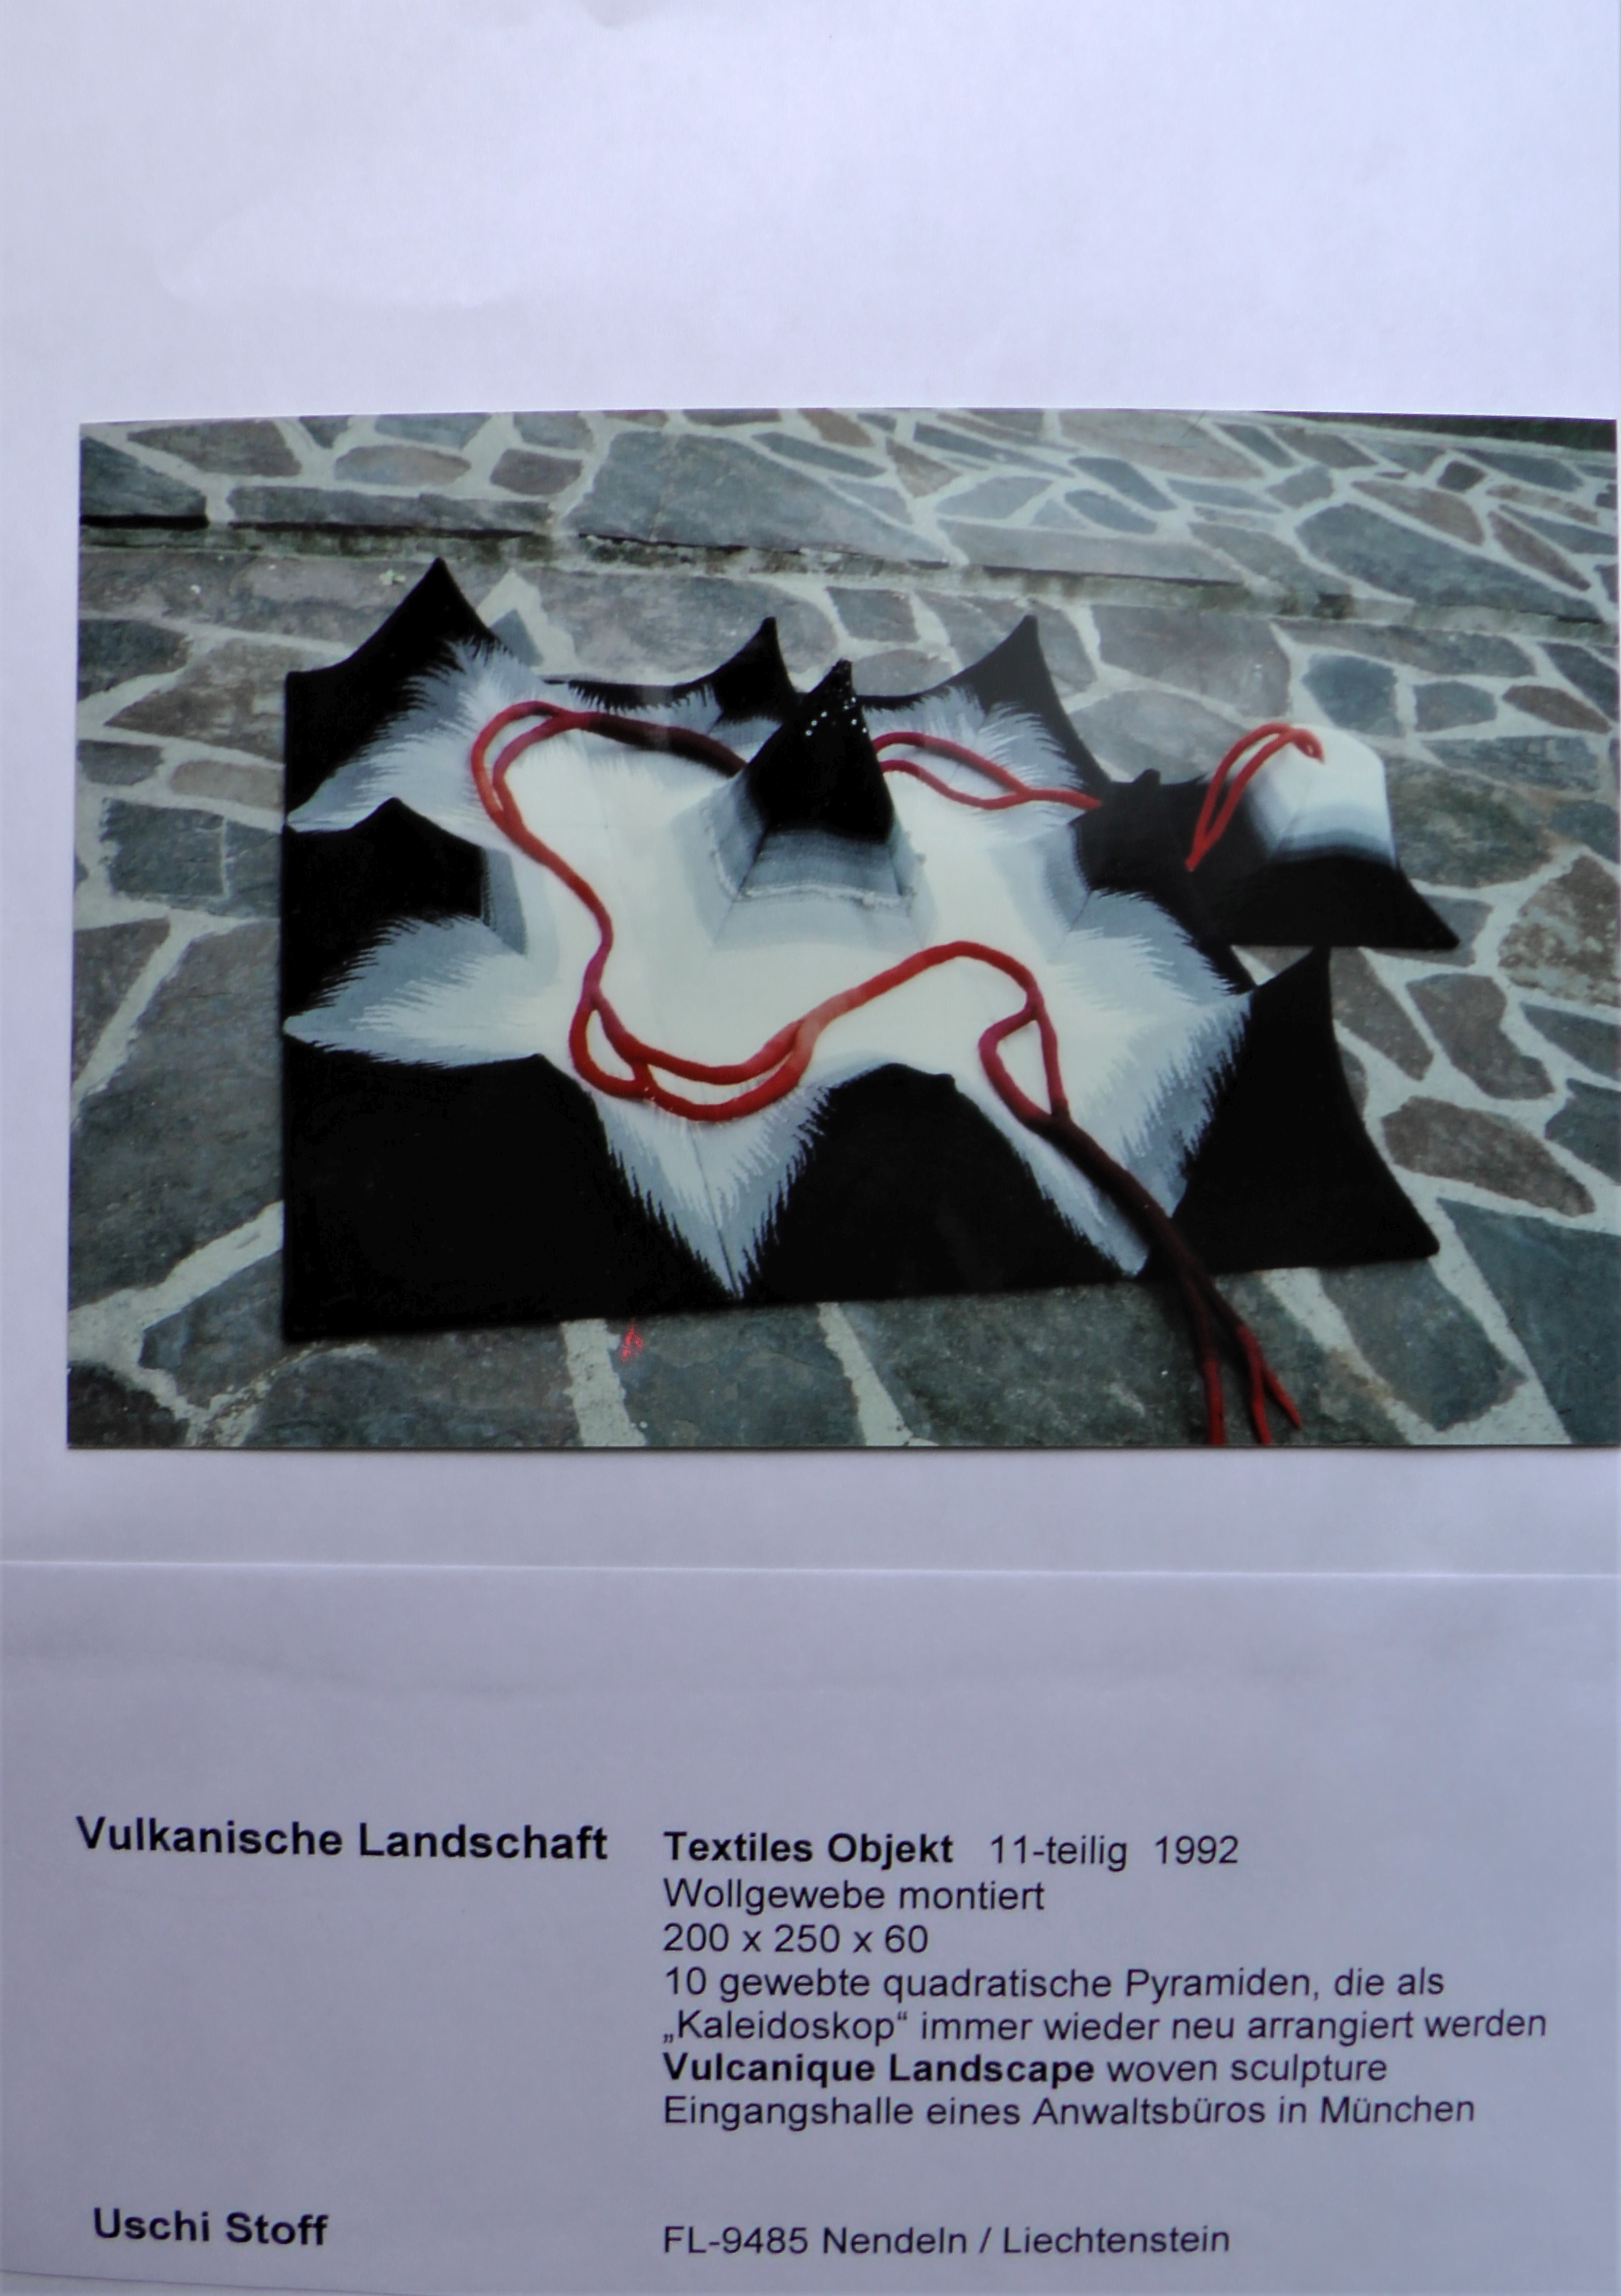 Uschi_Stoff_Vulkanlandschaft_München_1992.jpg